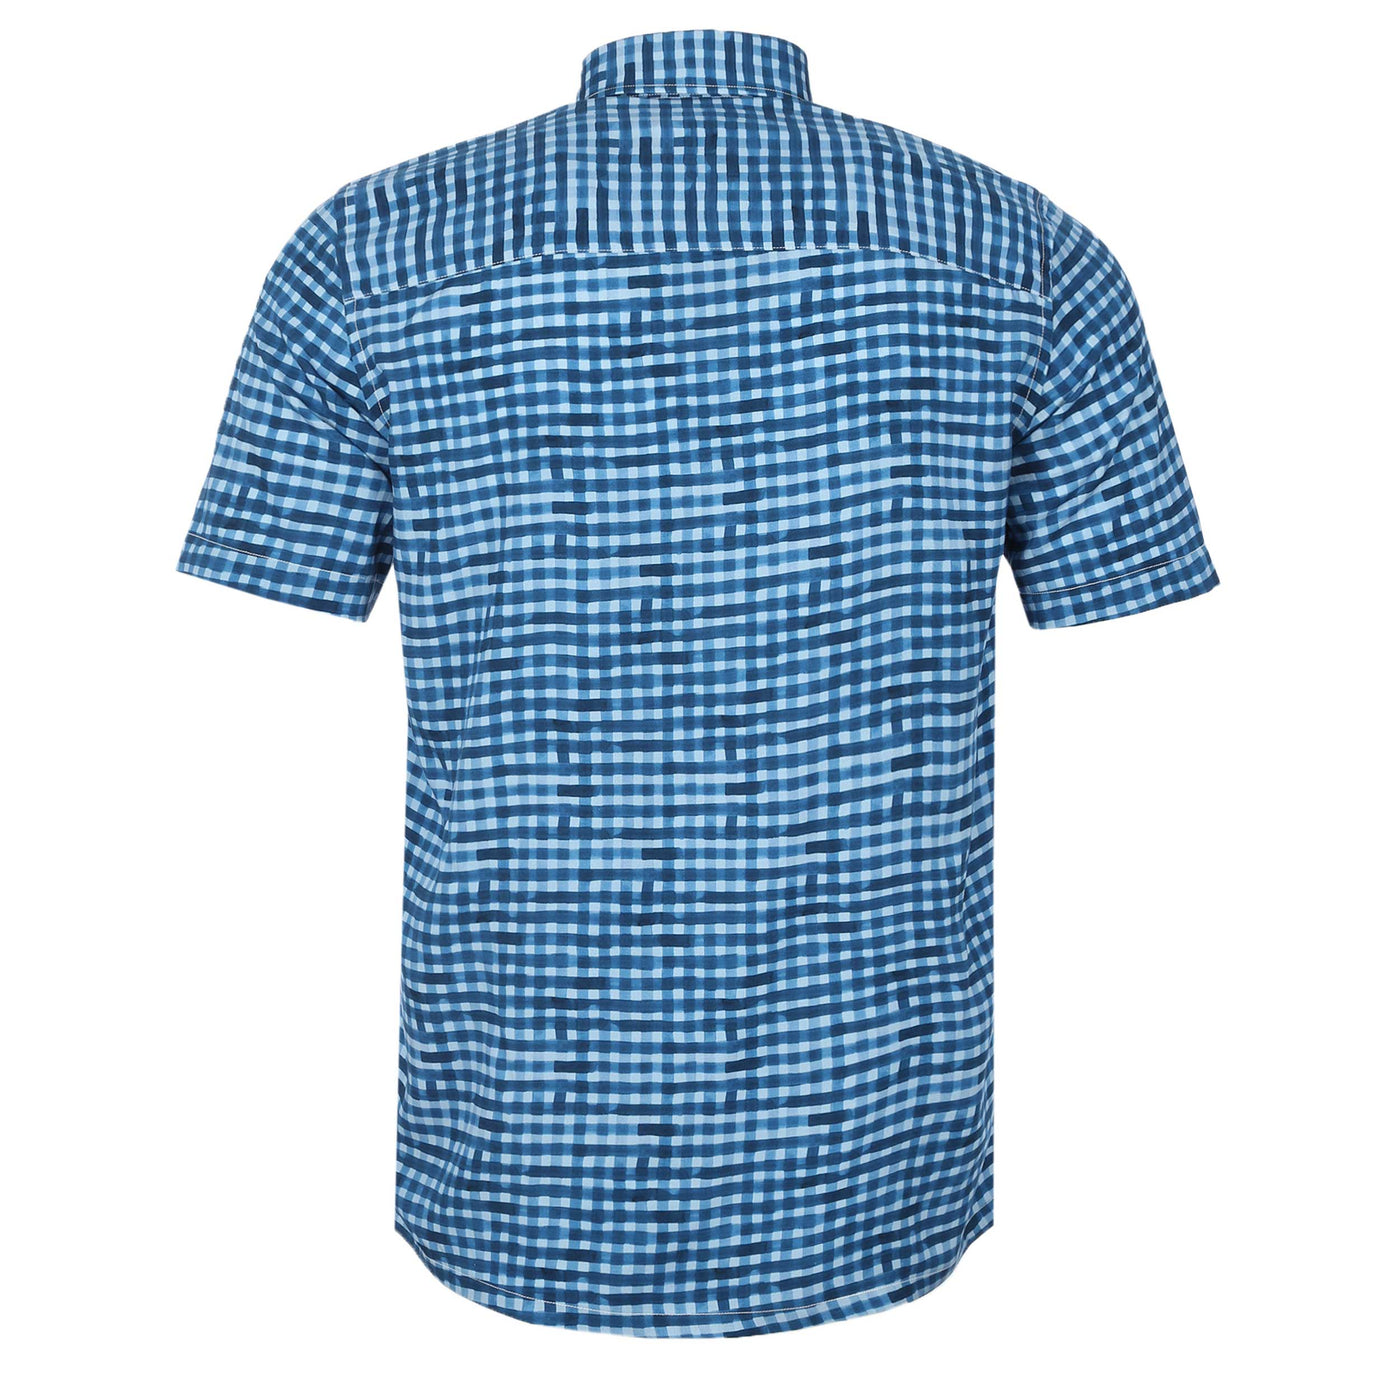 Canali Small Check Print SS Shirt in Blue Print Back